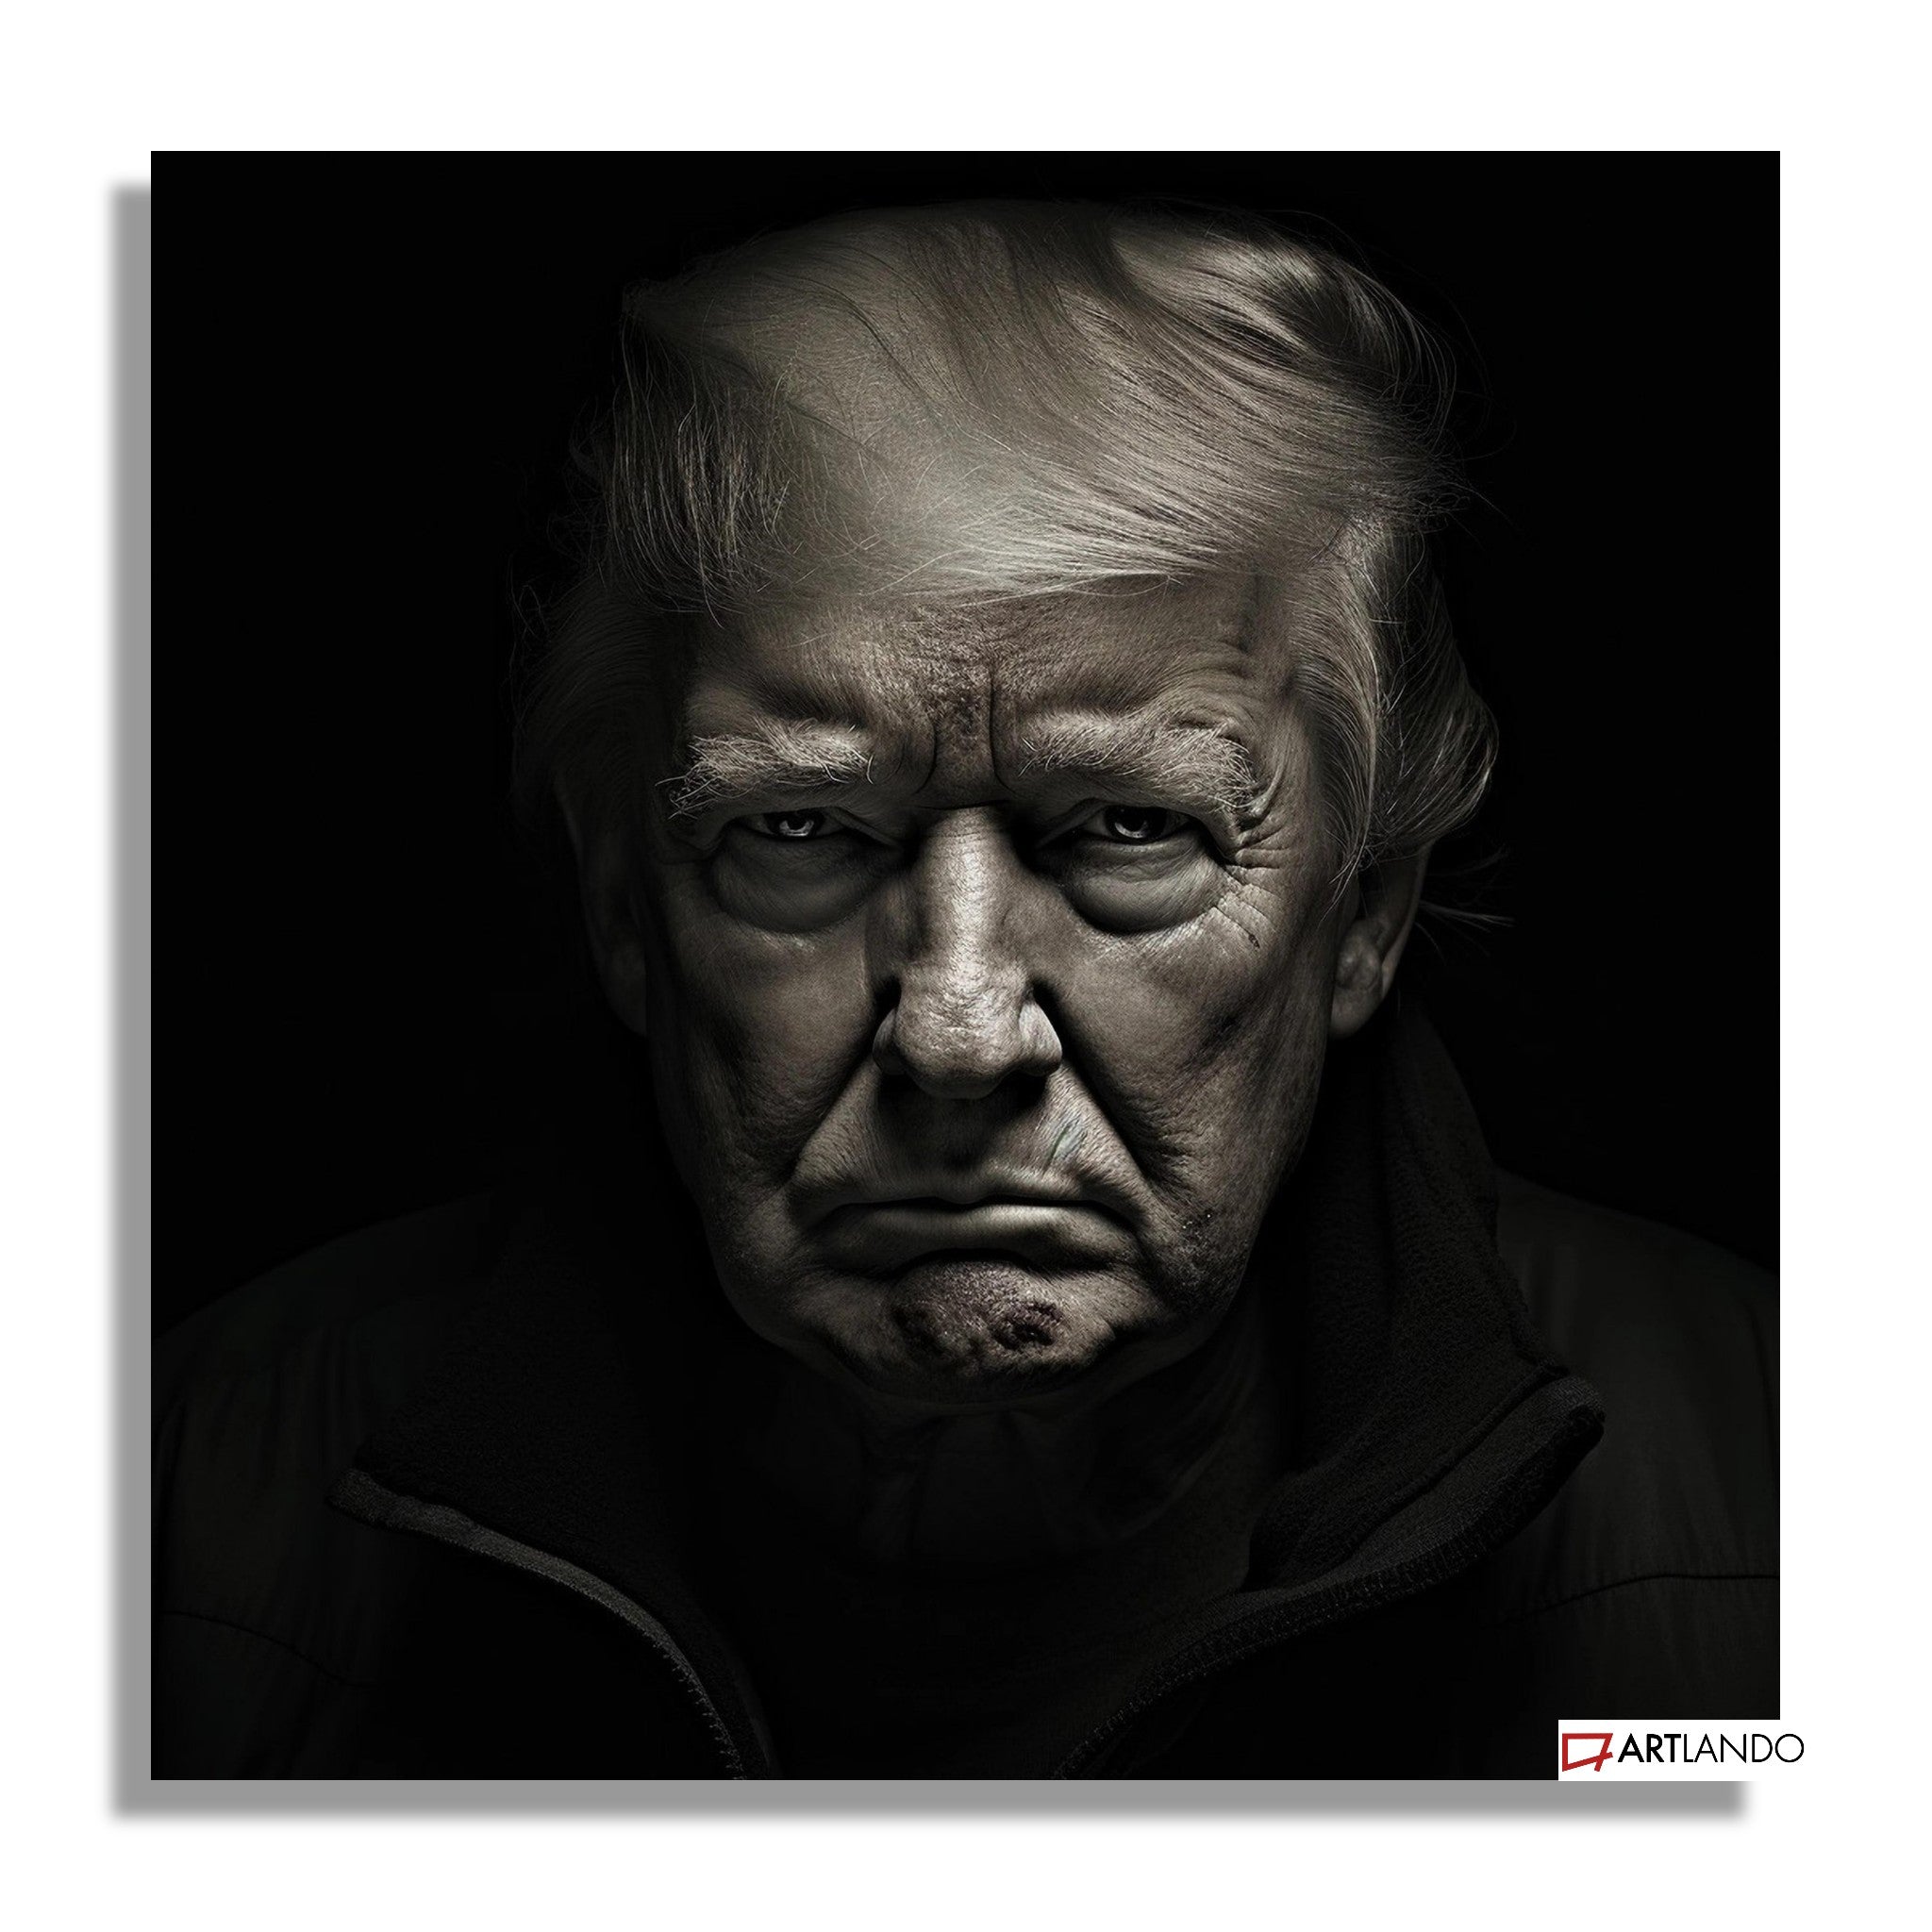 Porträt des Charismas - Donald Trump in kraftvollem Schwarz-Weiß